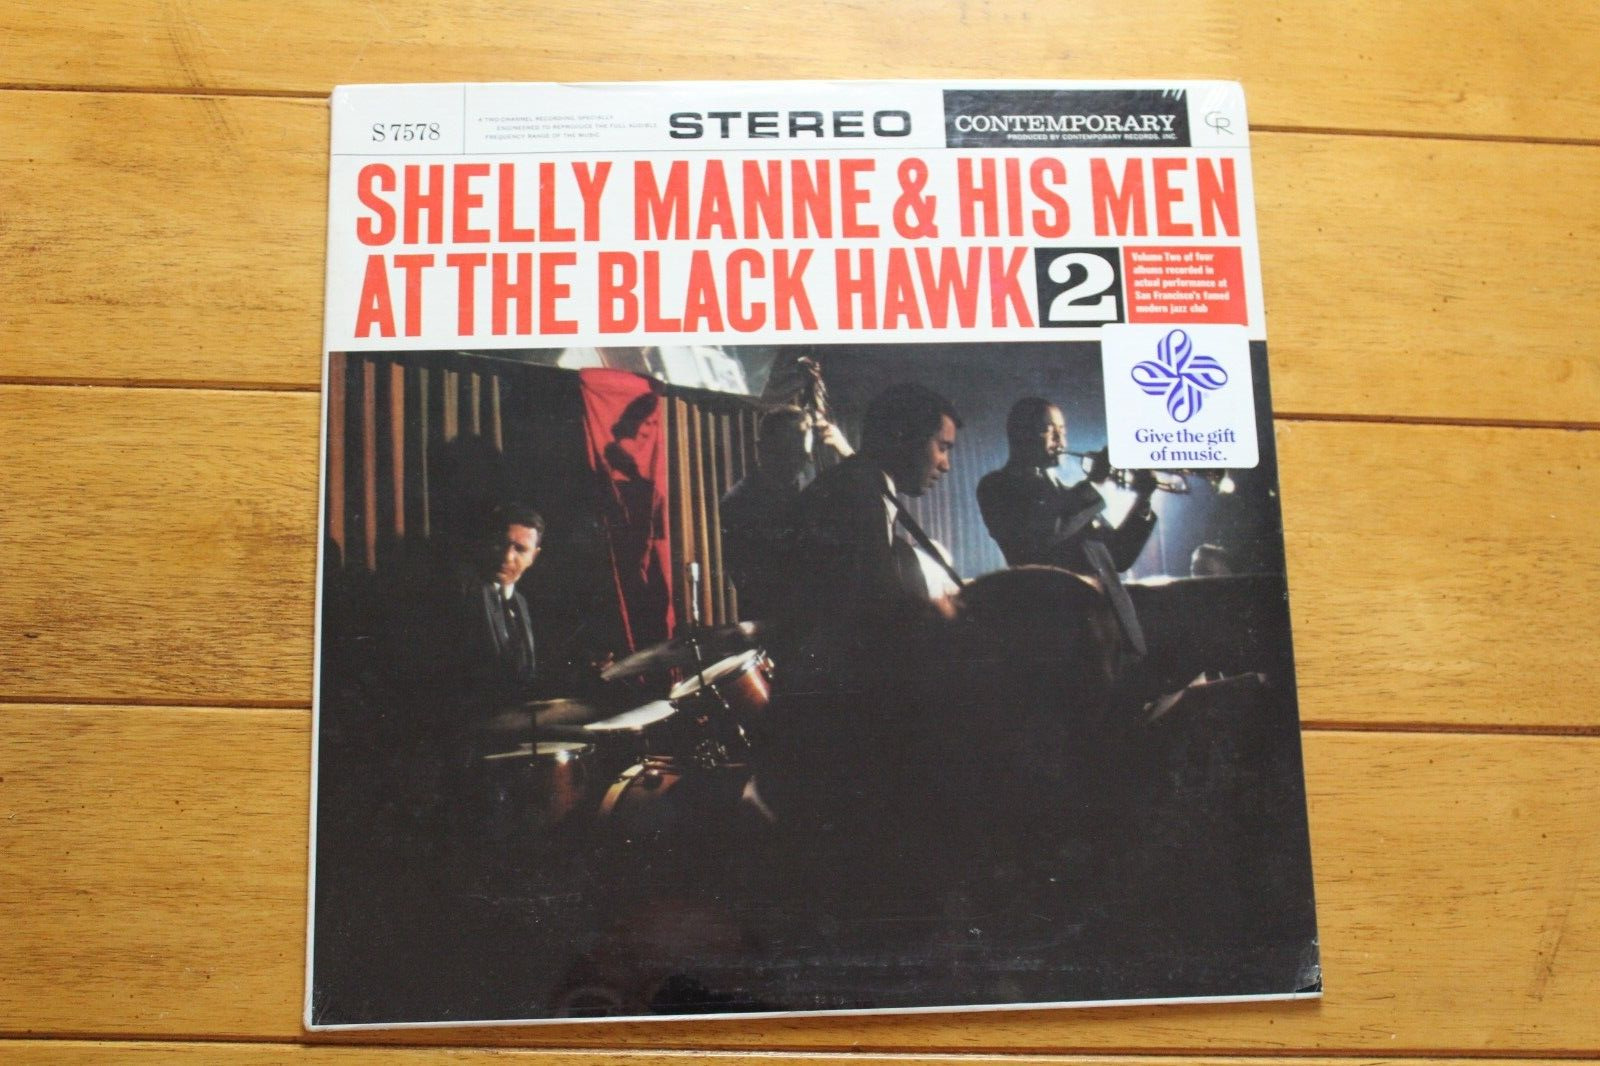 SHELLY MANNE & HIS MEN AT THE BLACK HAWK 2 [NEW LP] 12" VINYL SEALED (S 7578)